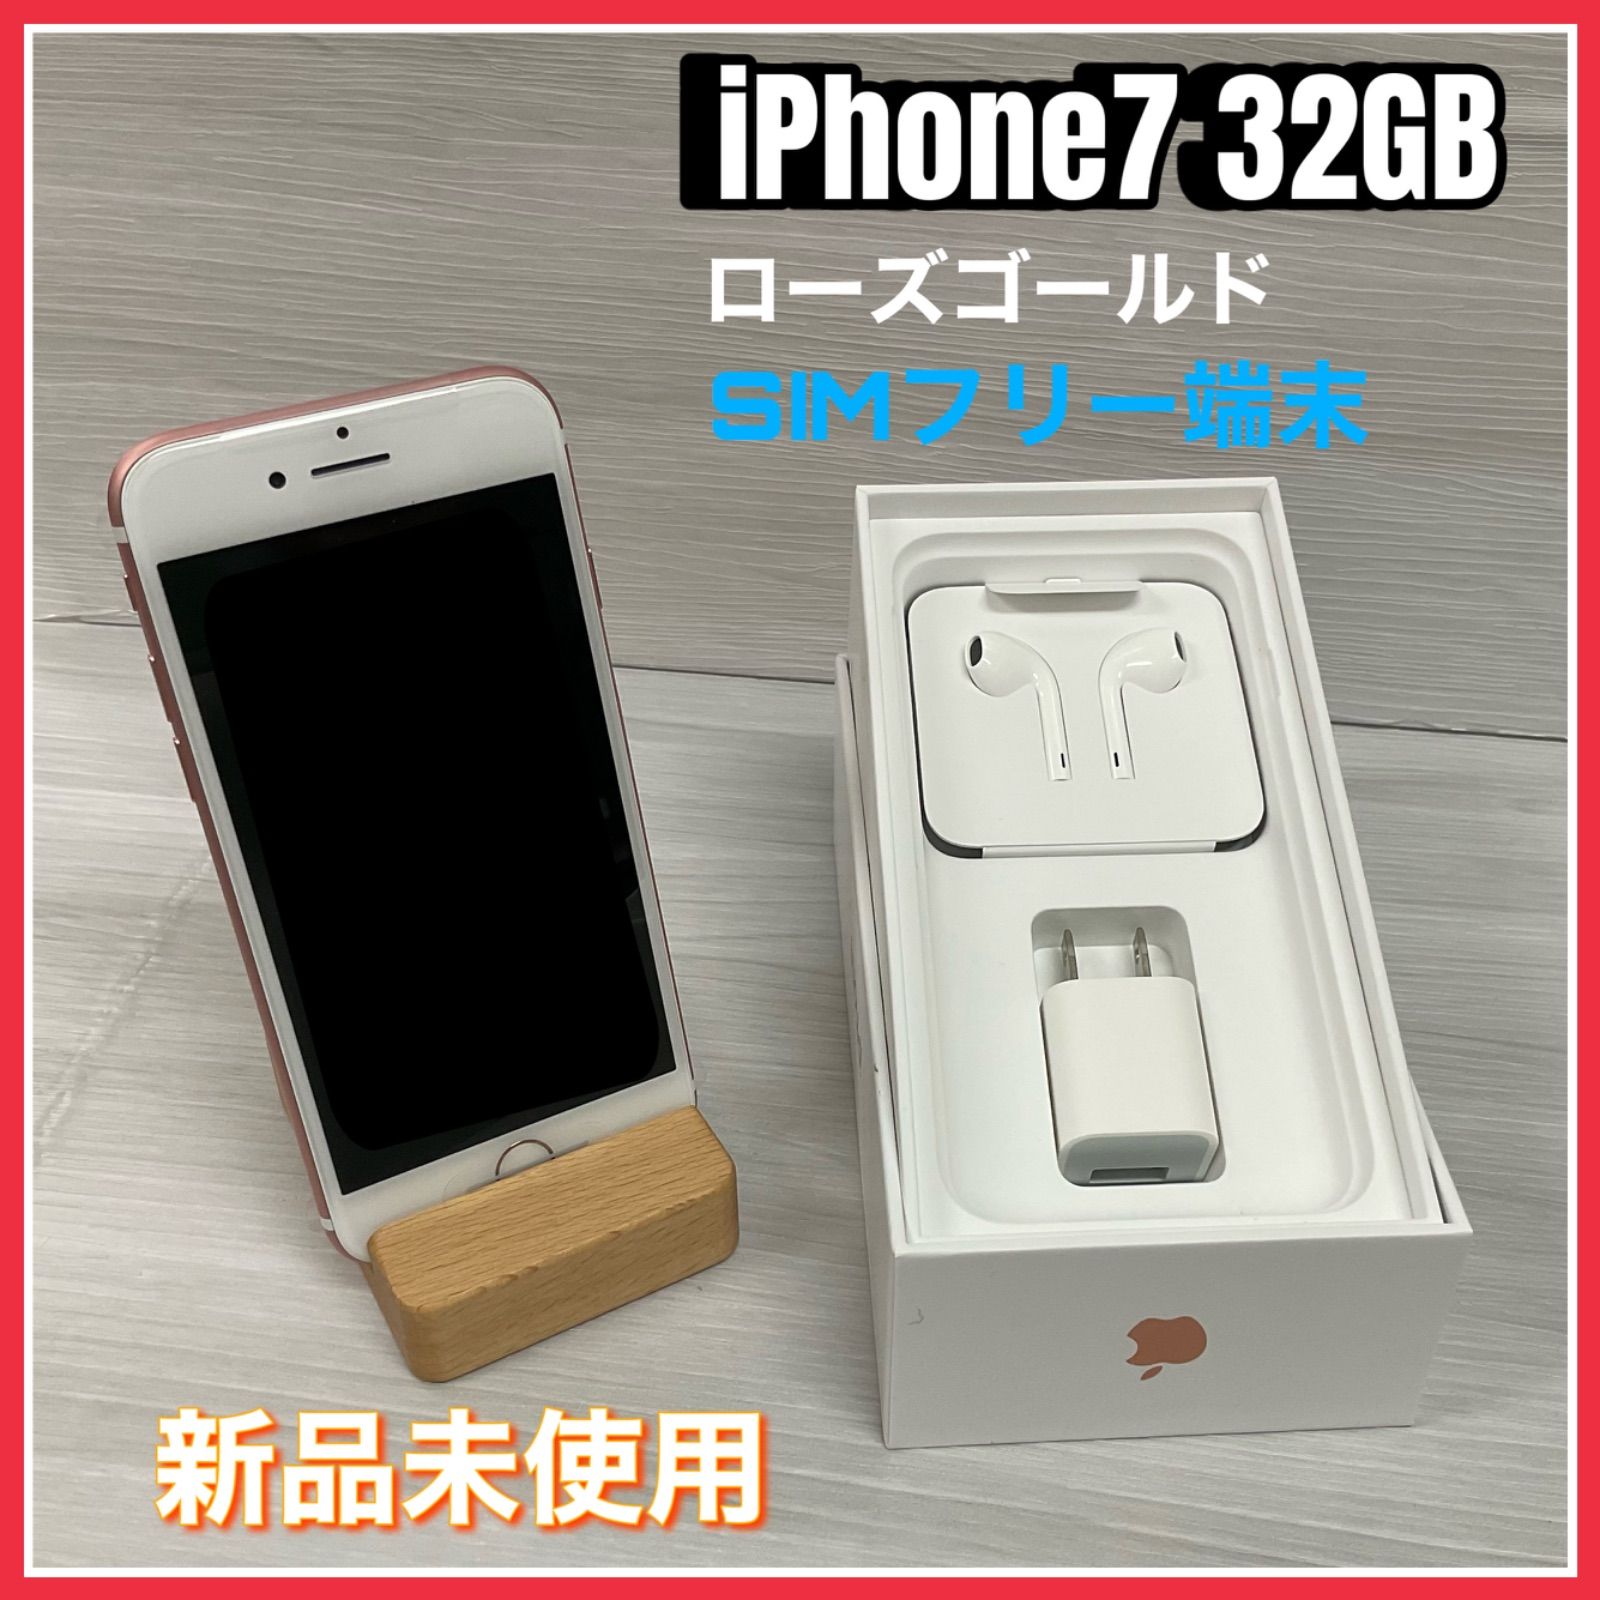 iPhone7 SIM無し - 携帯電話本体